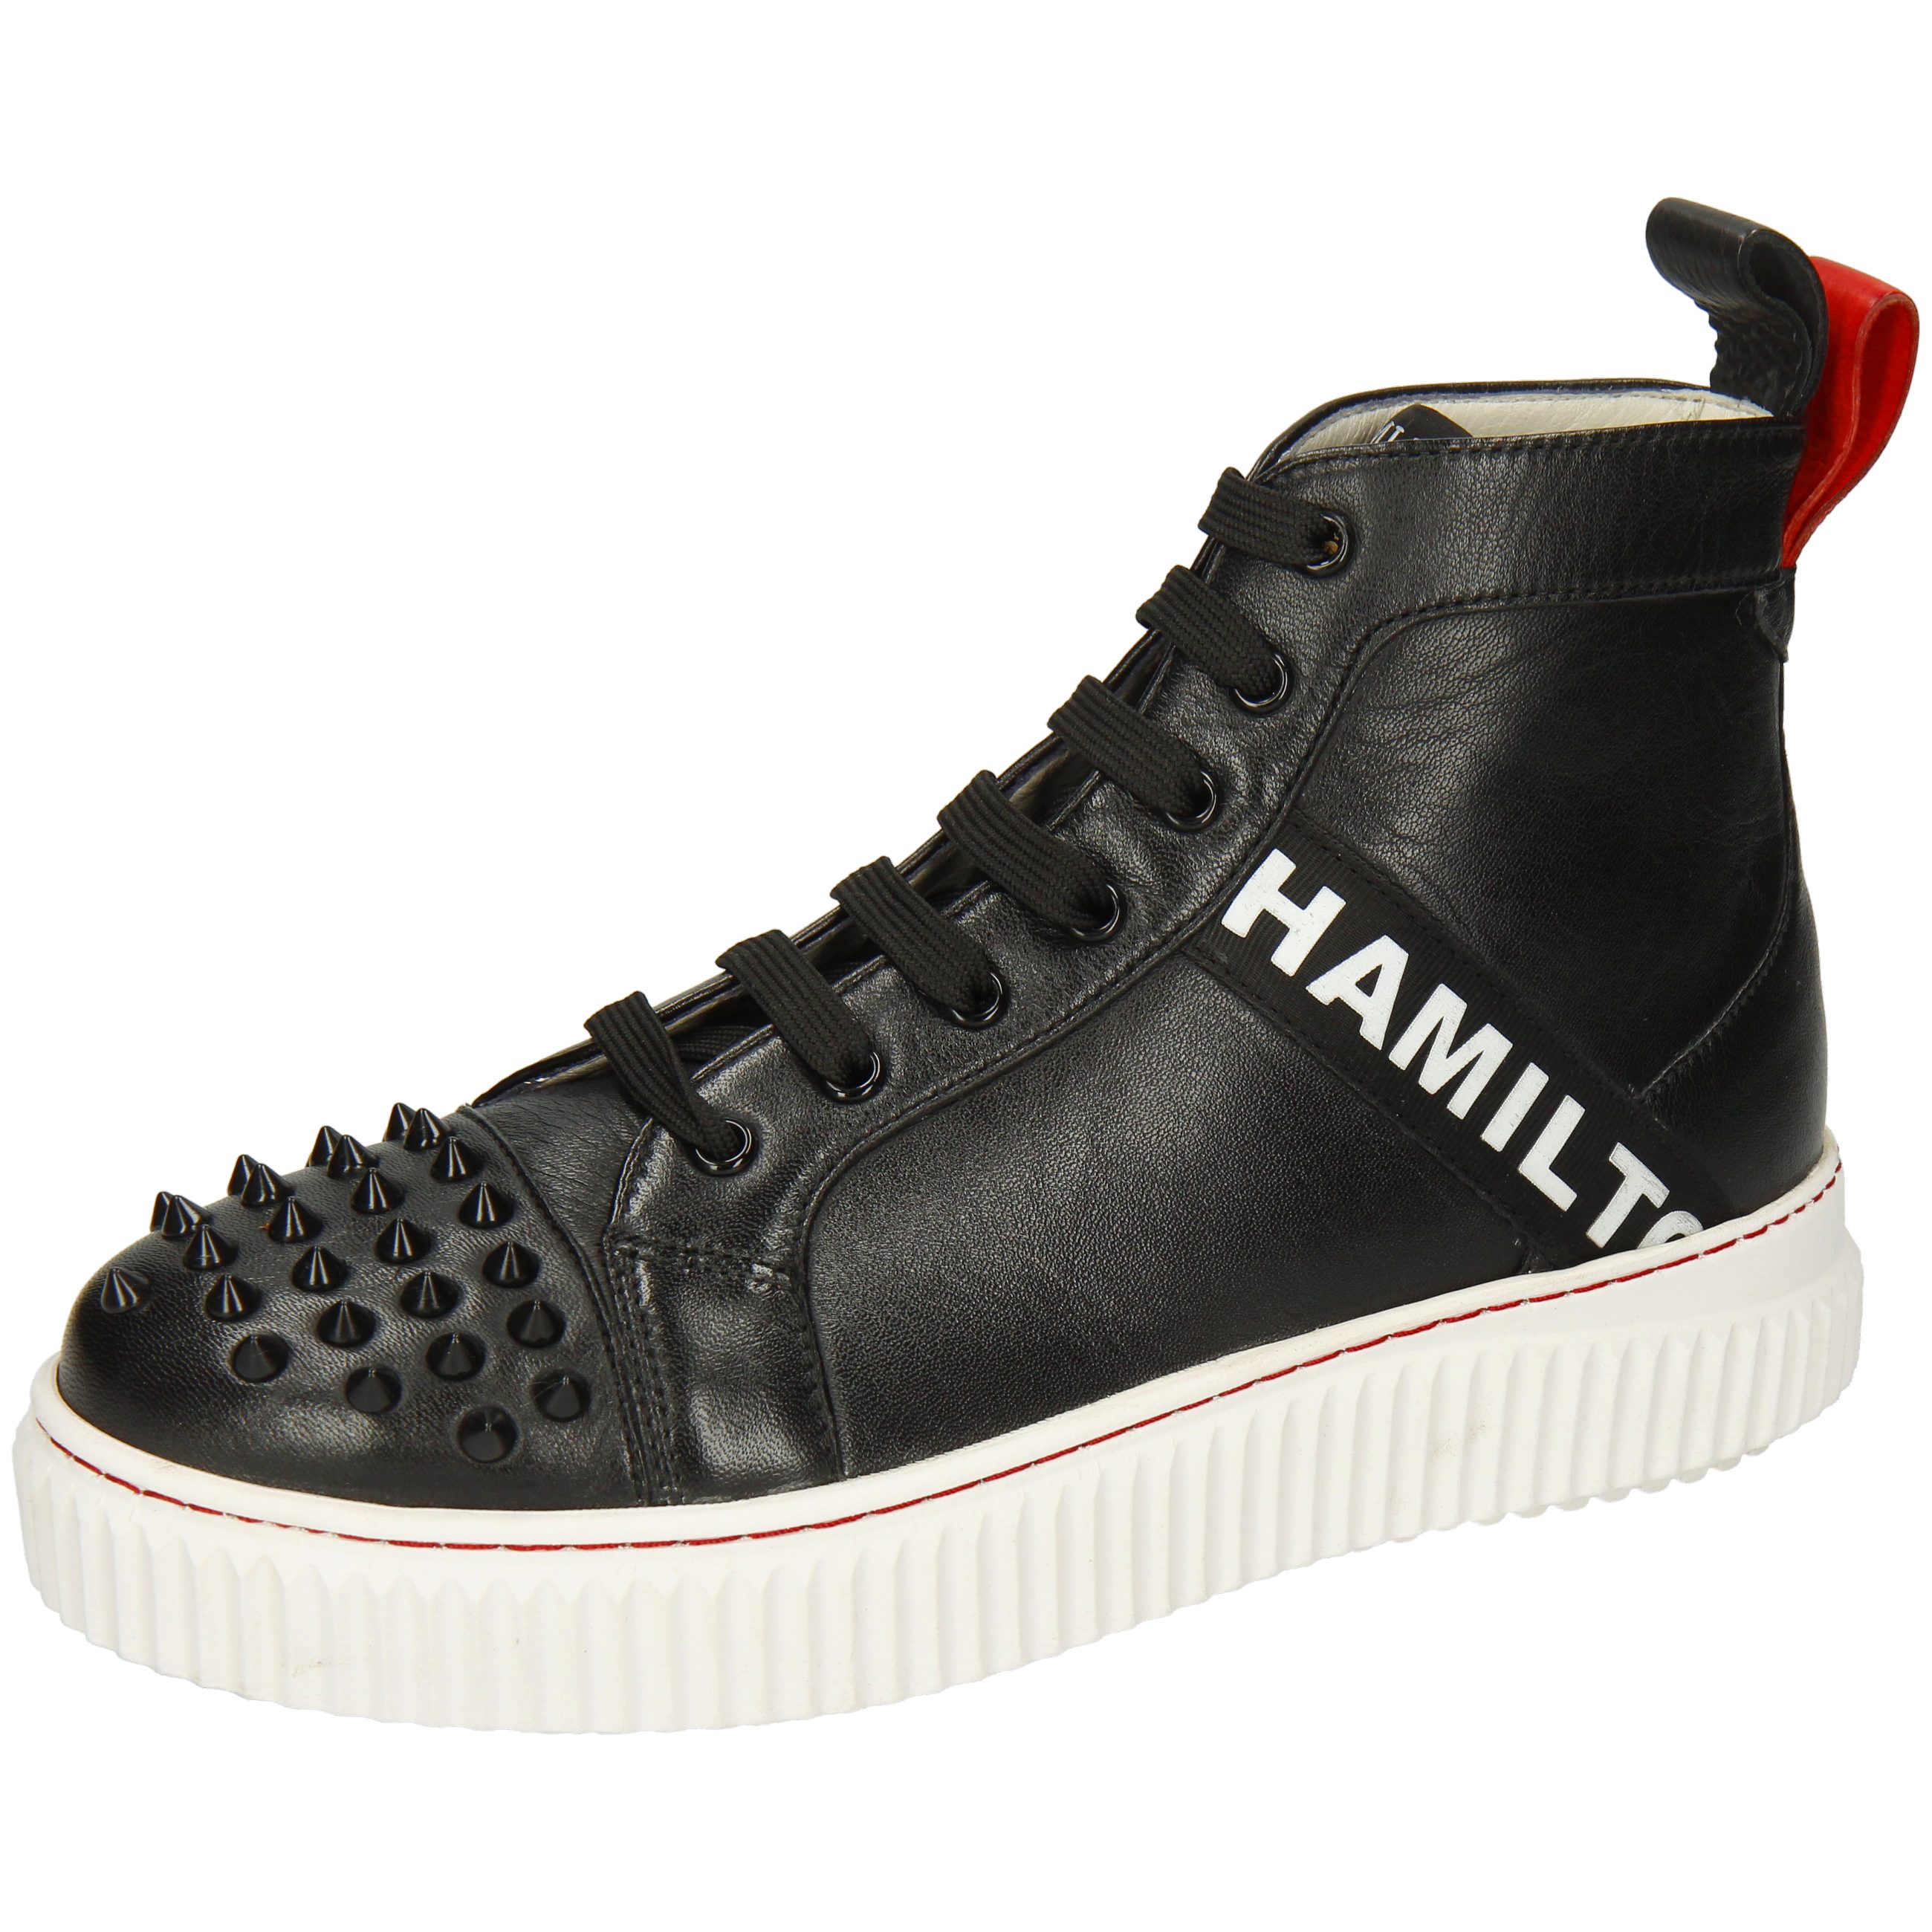 Melvin & Hamilton Nuri 2 Sneaker Glove Nappa Black Loop Red Tongue